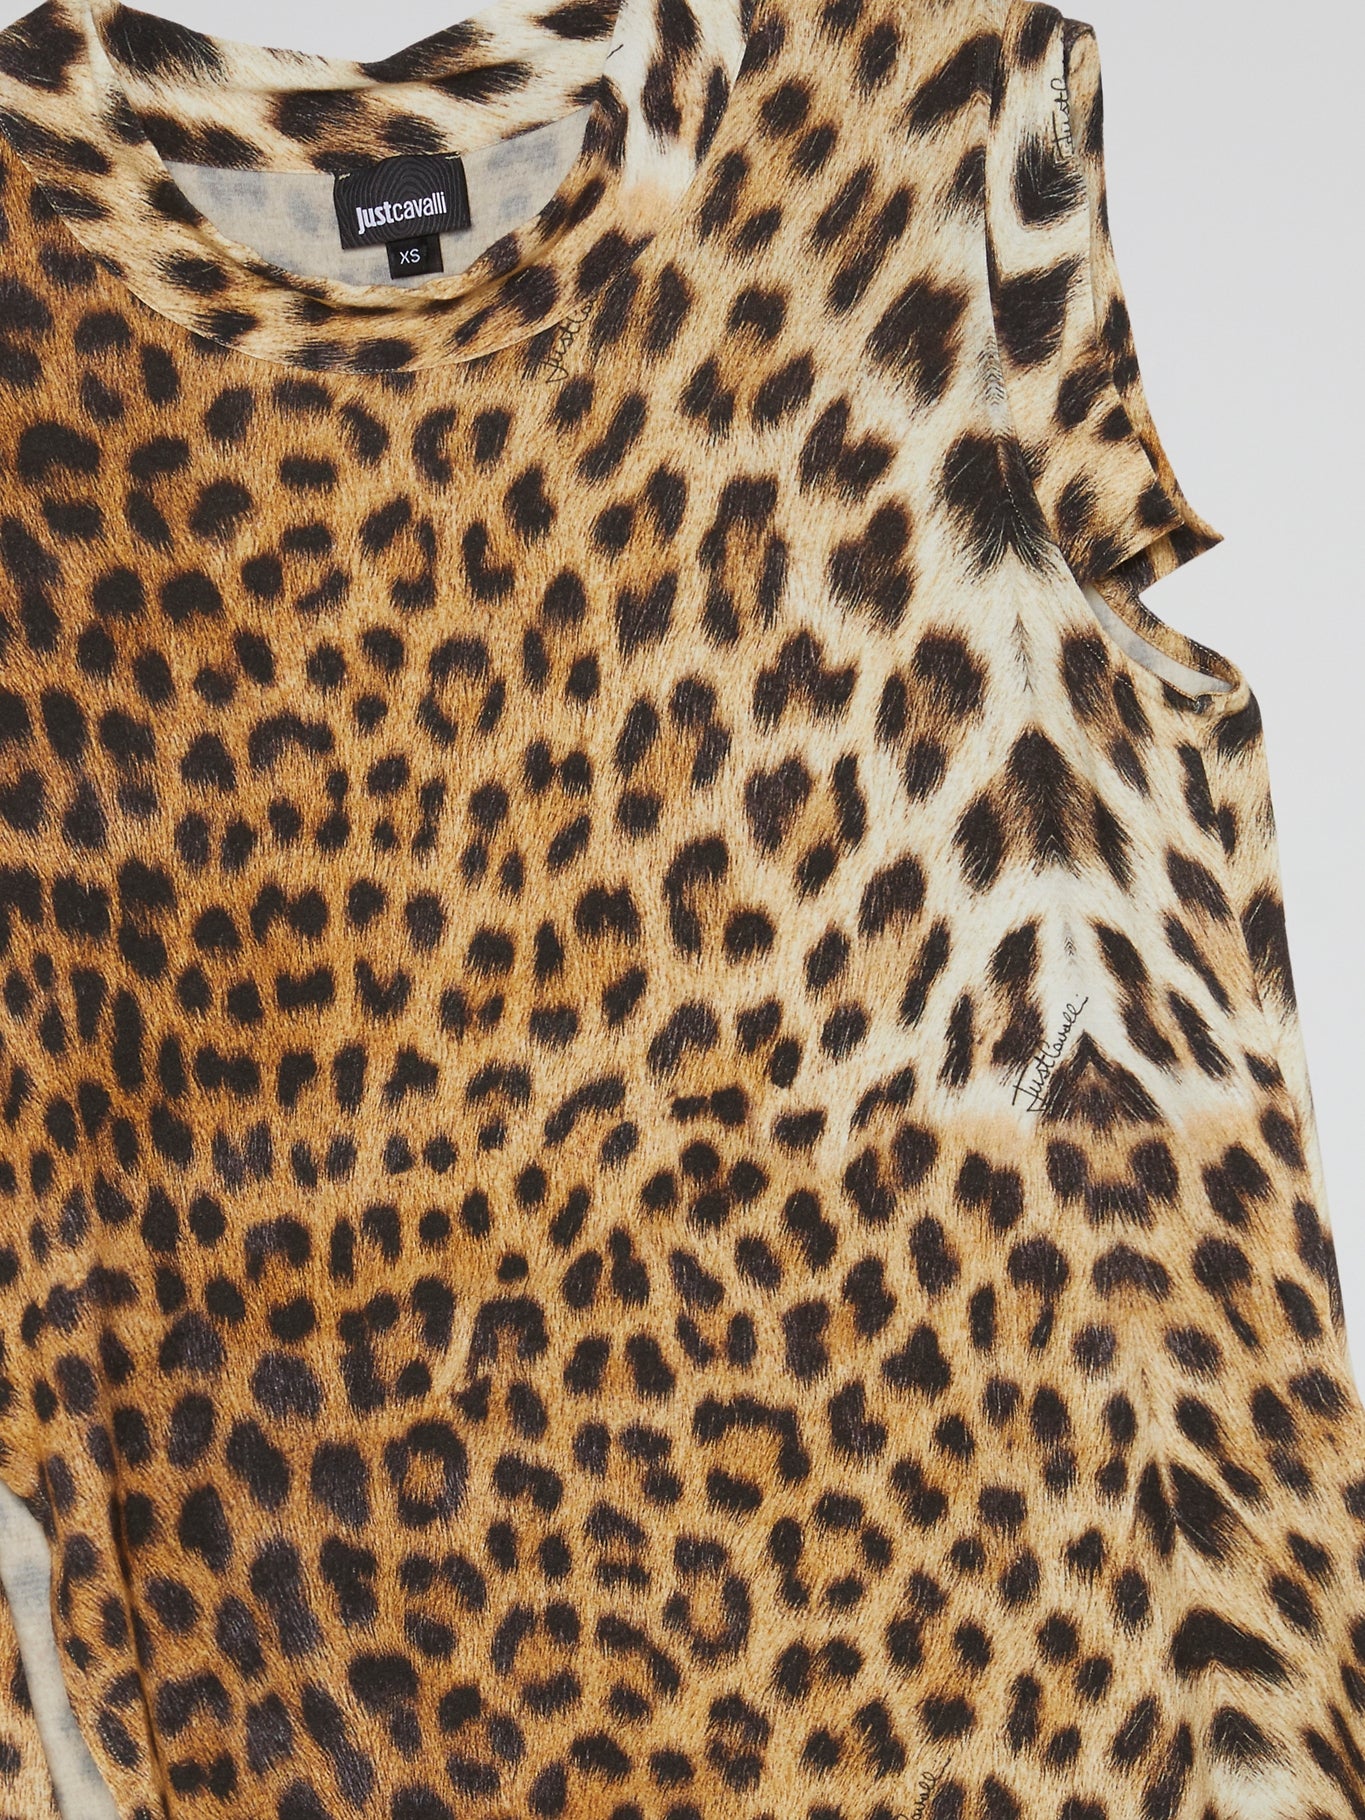 Leopard Print High-Low Top